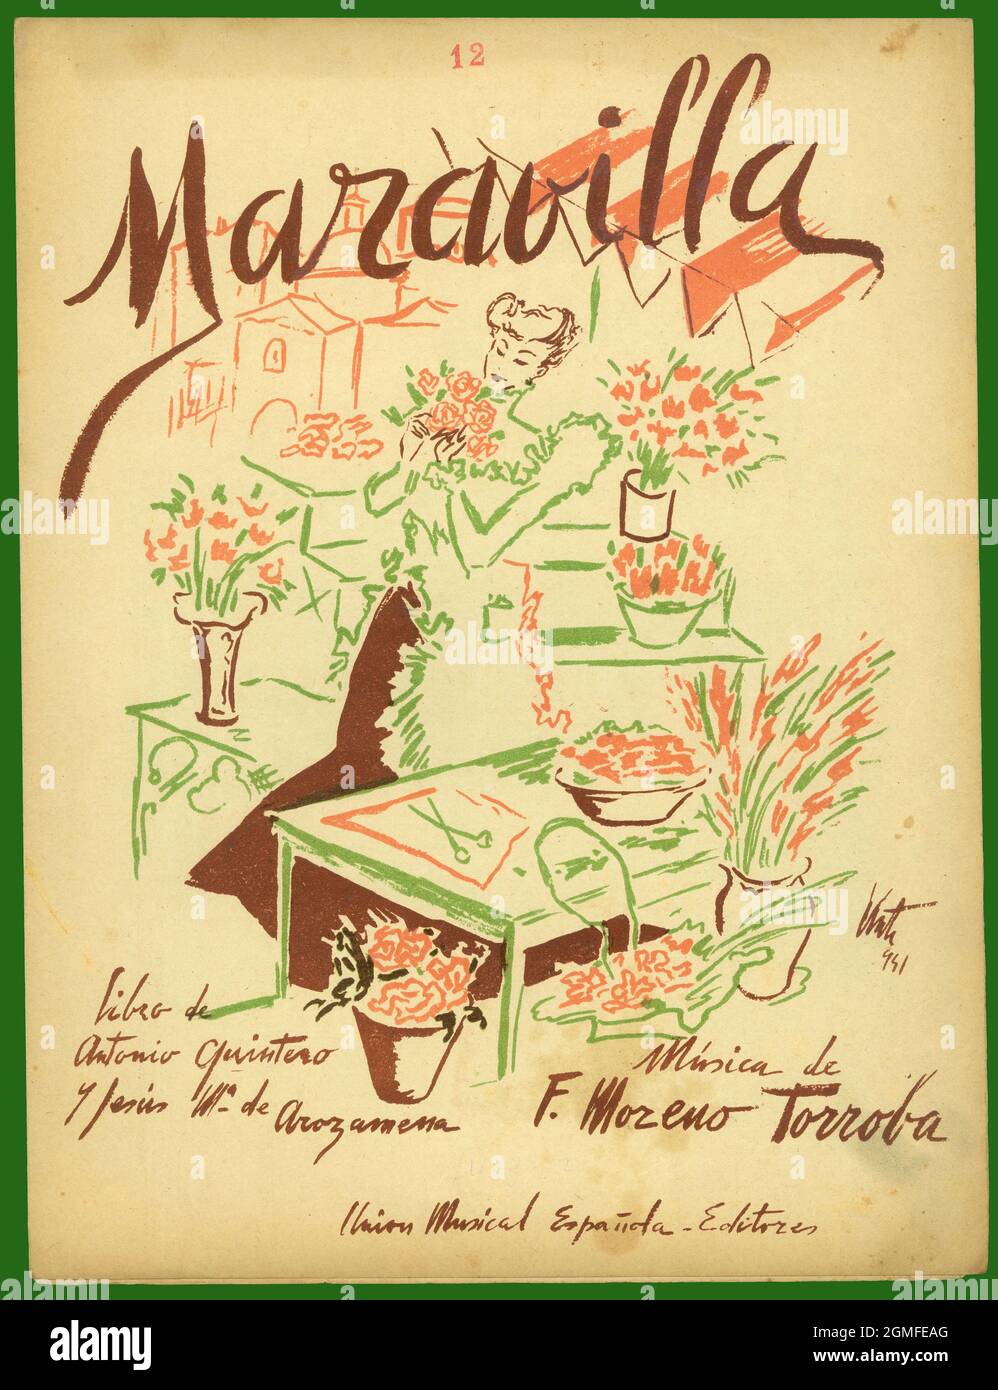 Partitura musical de la comedia lírica Maravilla, de Fernando Moreno Torroba. Madrid, año 1941. Stock Photo